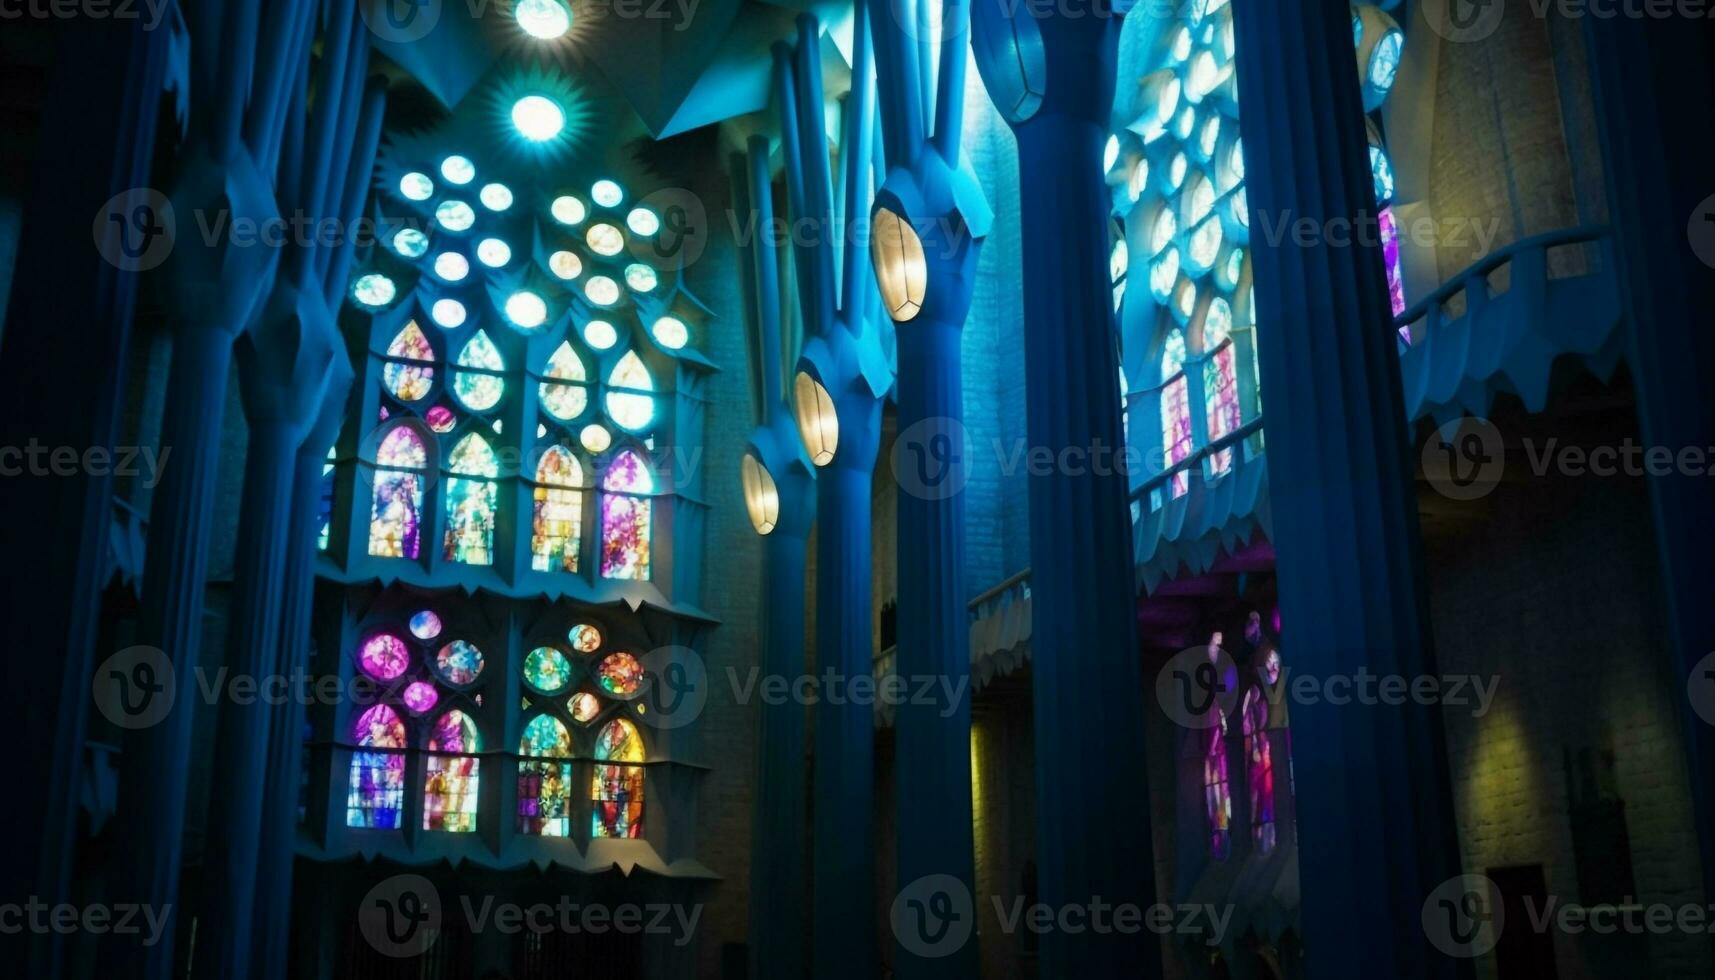 iluminado manchado vidro janelas iluminar a gótico basílica gerado de ai foto